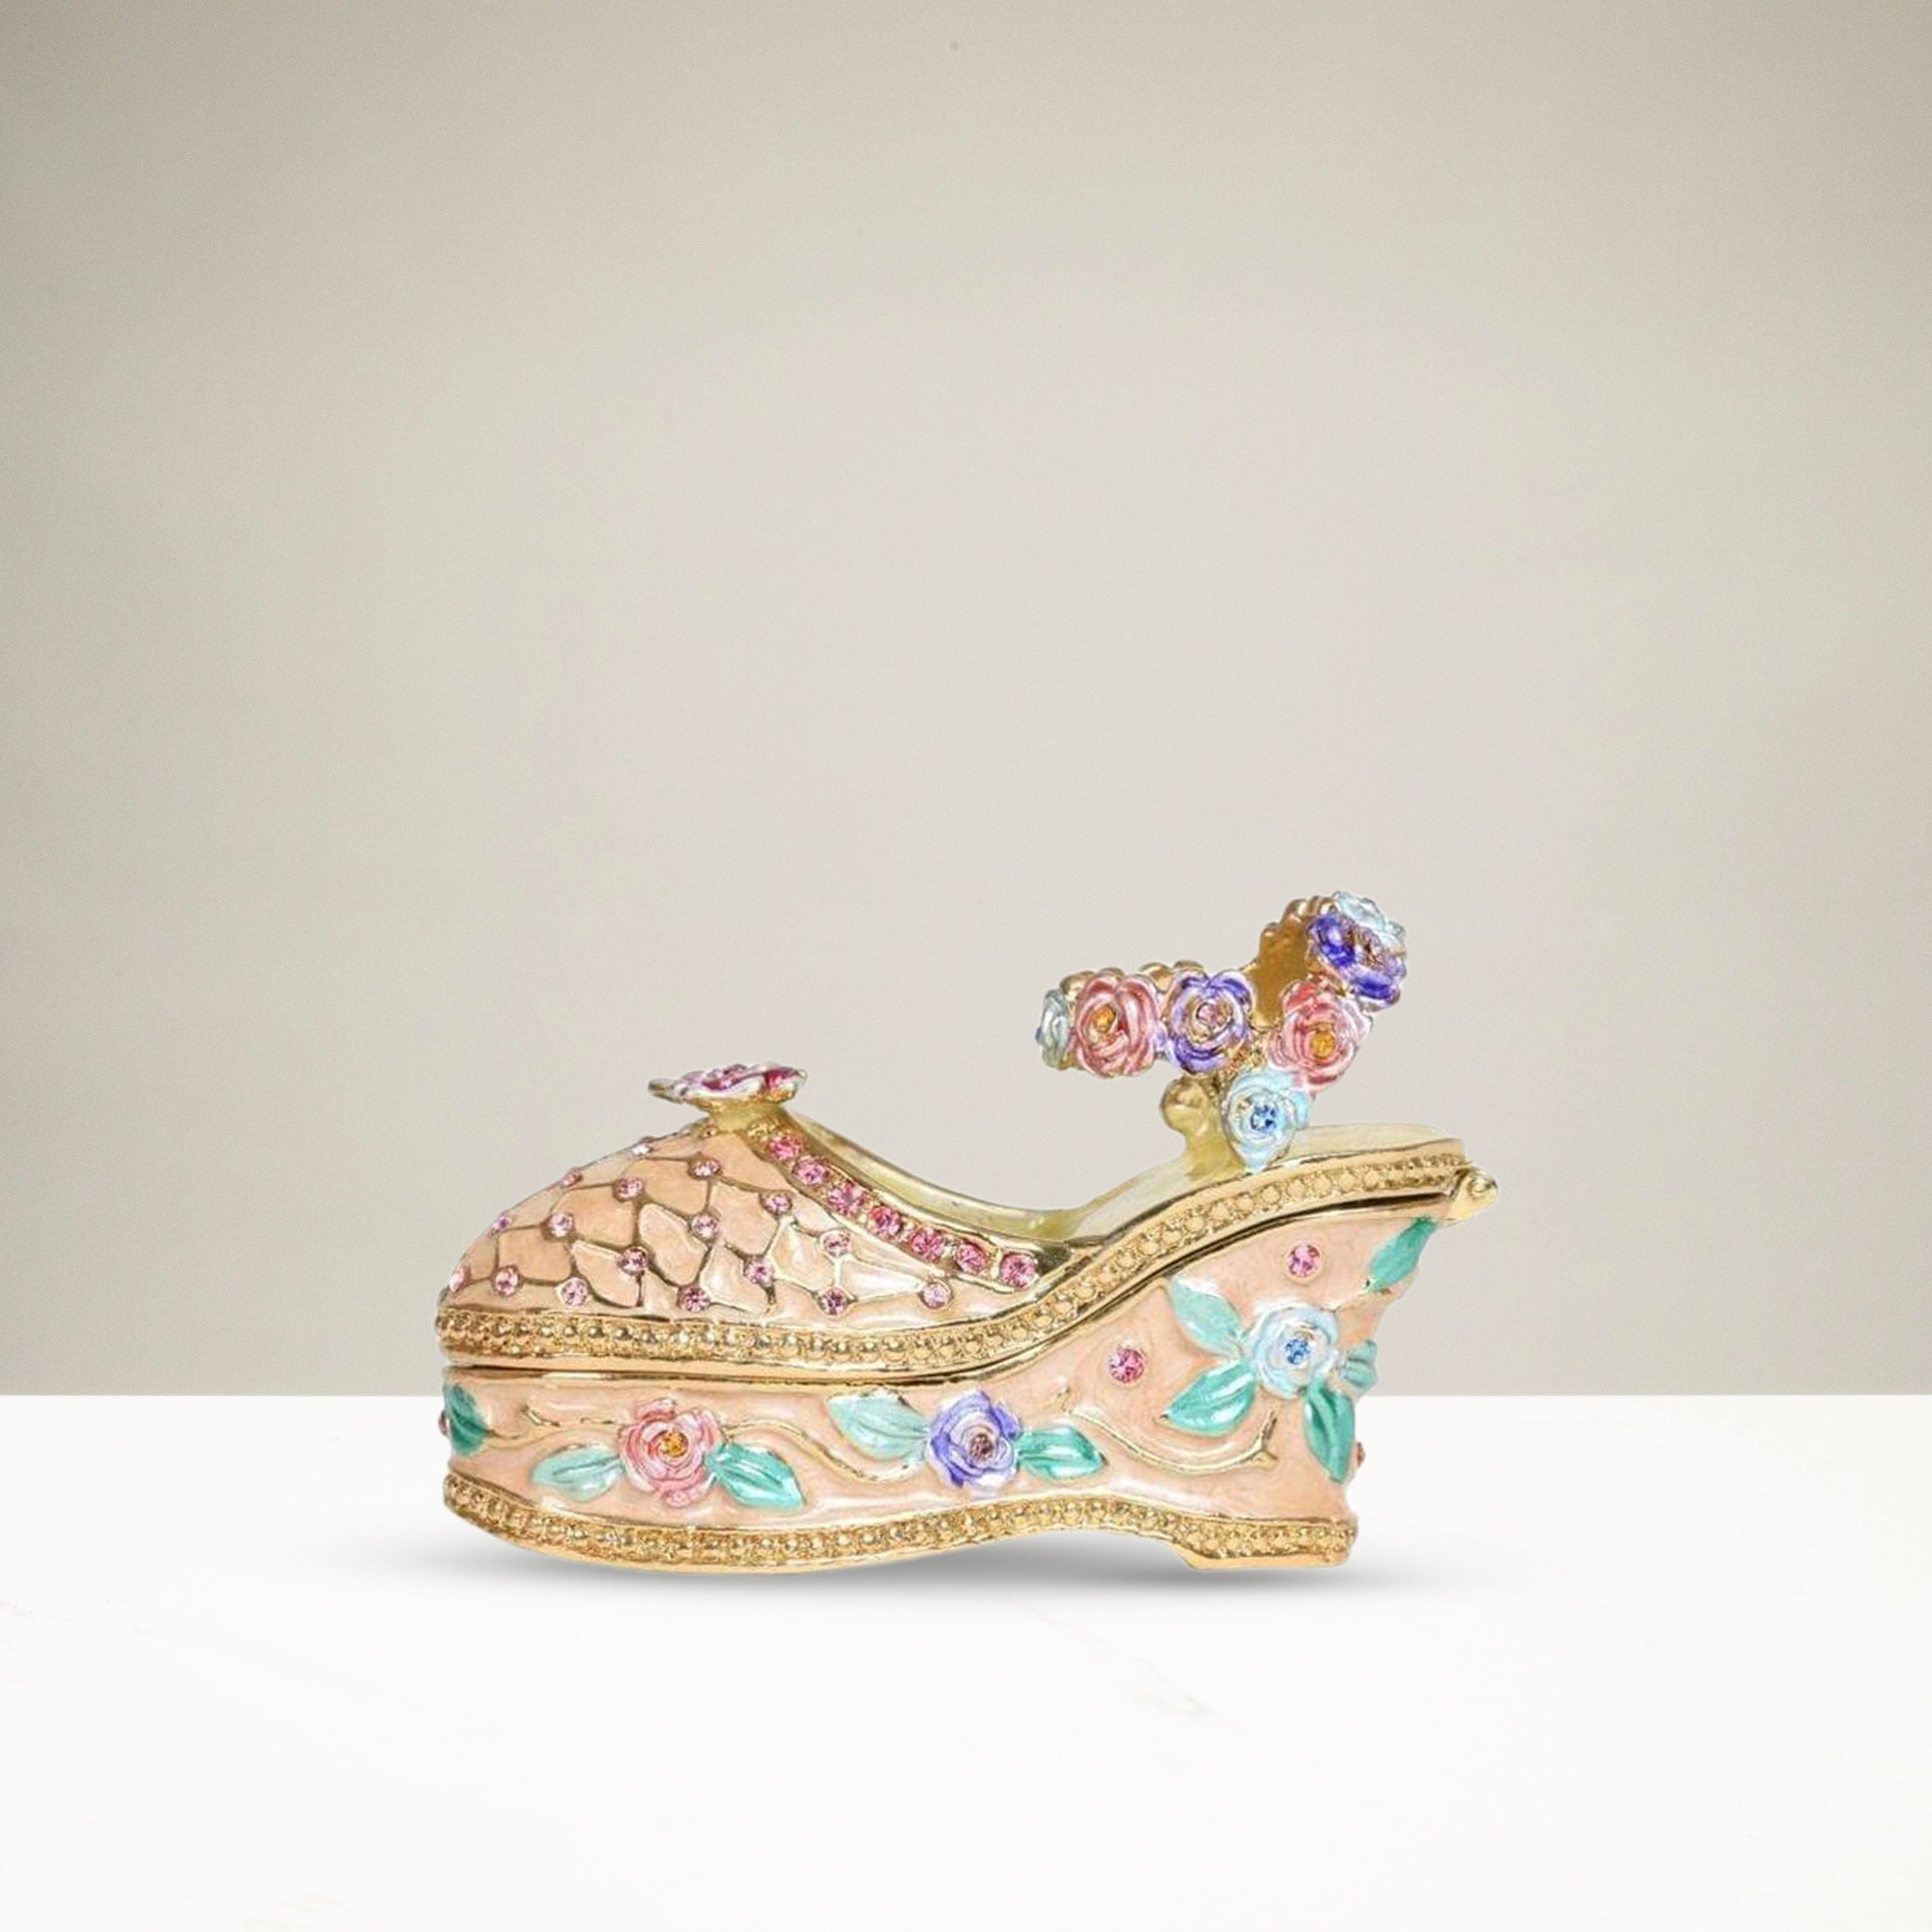 Kalifano Vanity Figurine Pink and Beige Shoe Figurine Keepsake Box with Swarovski Crystals SVA-014